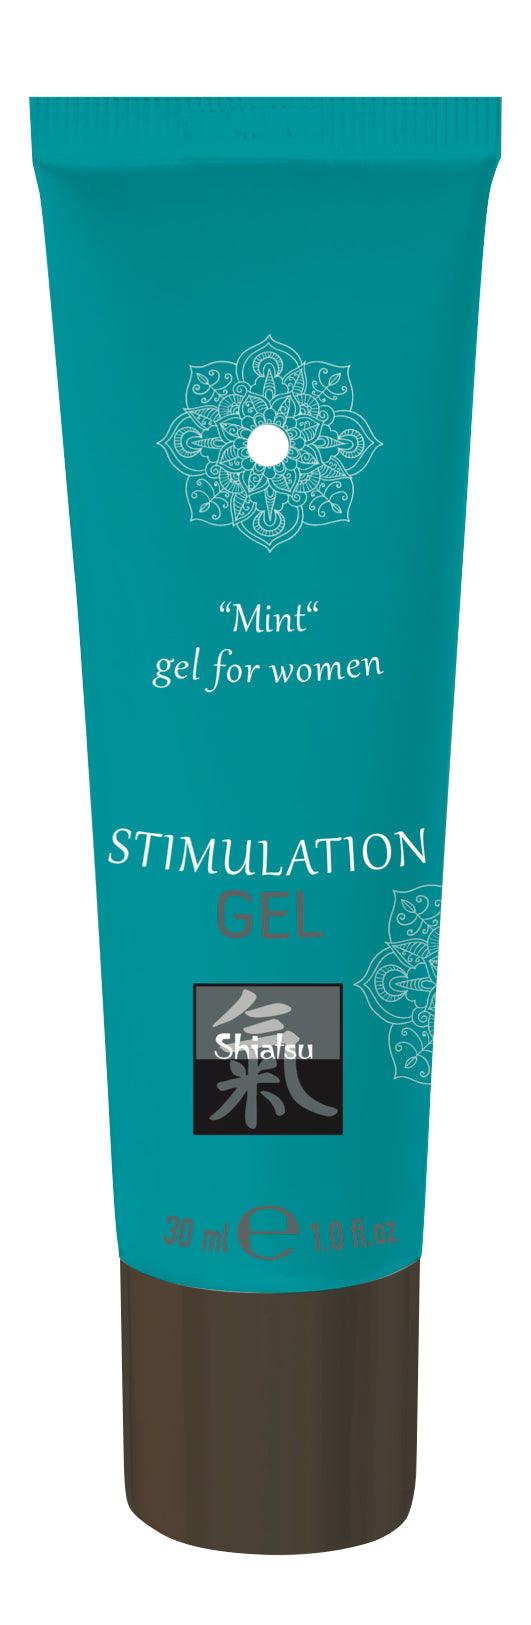 Shiatsu Clitoral Stimulation Gel Mint 30ml - Take A Peek